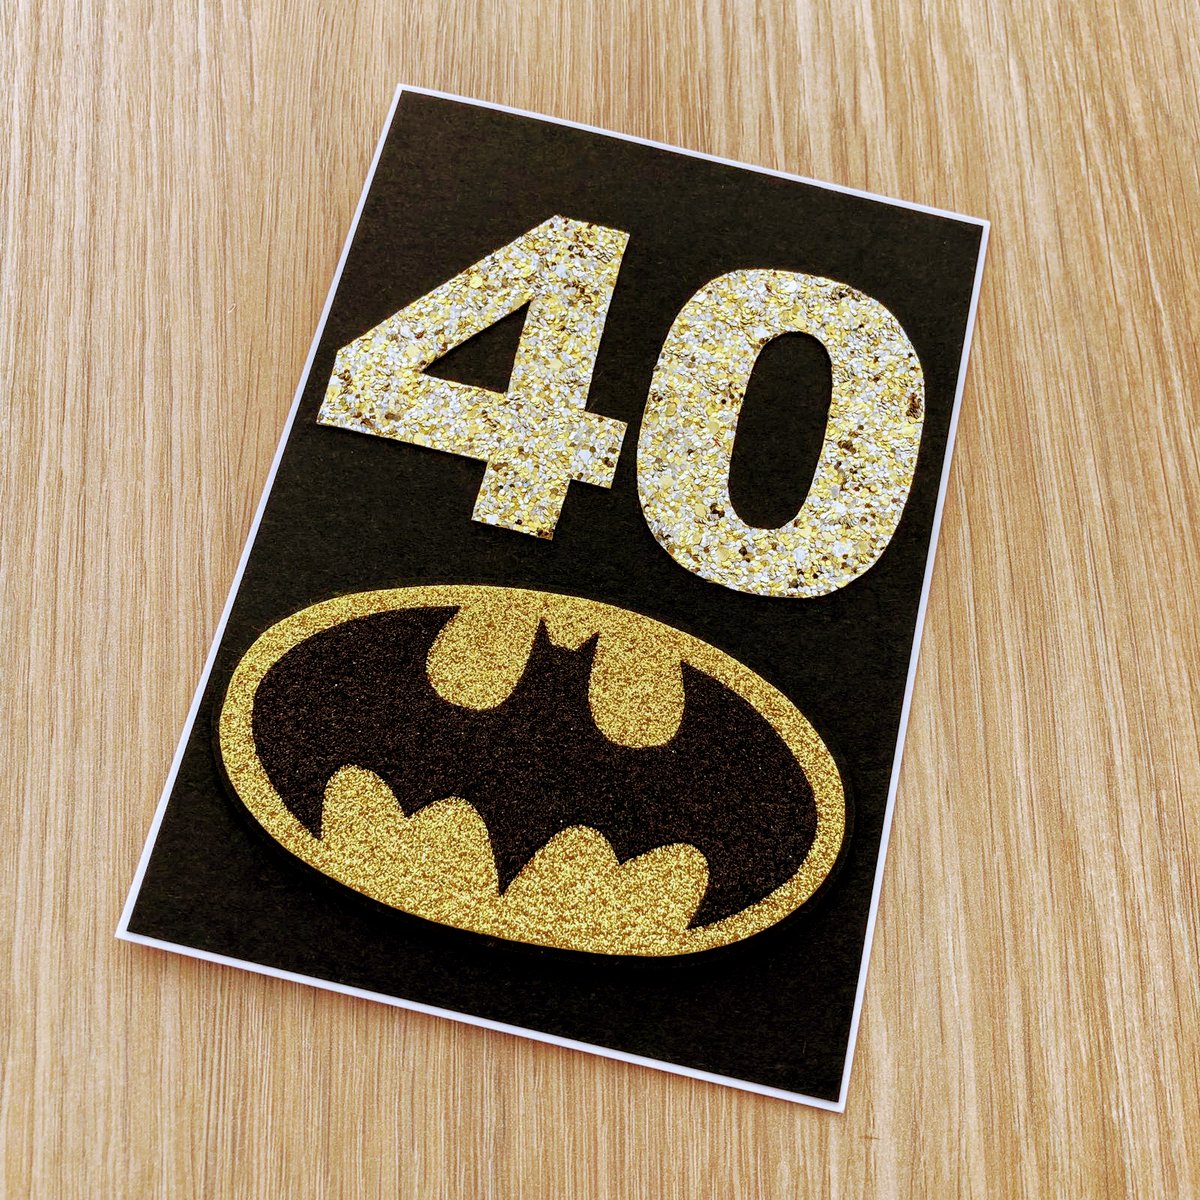 Na Na Na Na Na Na Na Na Na Na Na Na Na!

Batma-a-a-a-a-a-an!

Bespoke super sparkly 40th Batman birthday card.
✨🦇✨
Your custom words and design on a card...
DM for enquiries
#sendacardsendasmile #batmanbirthdaycard #bespokecards #customcards #lovehappyapple